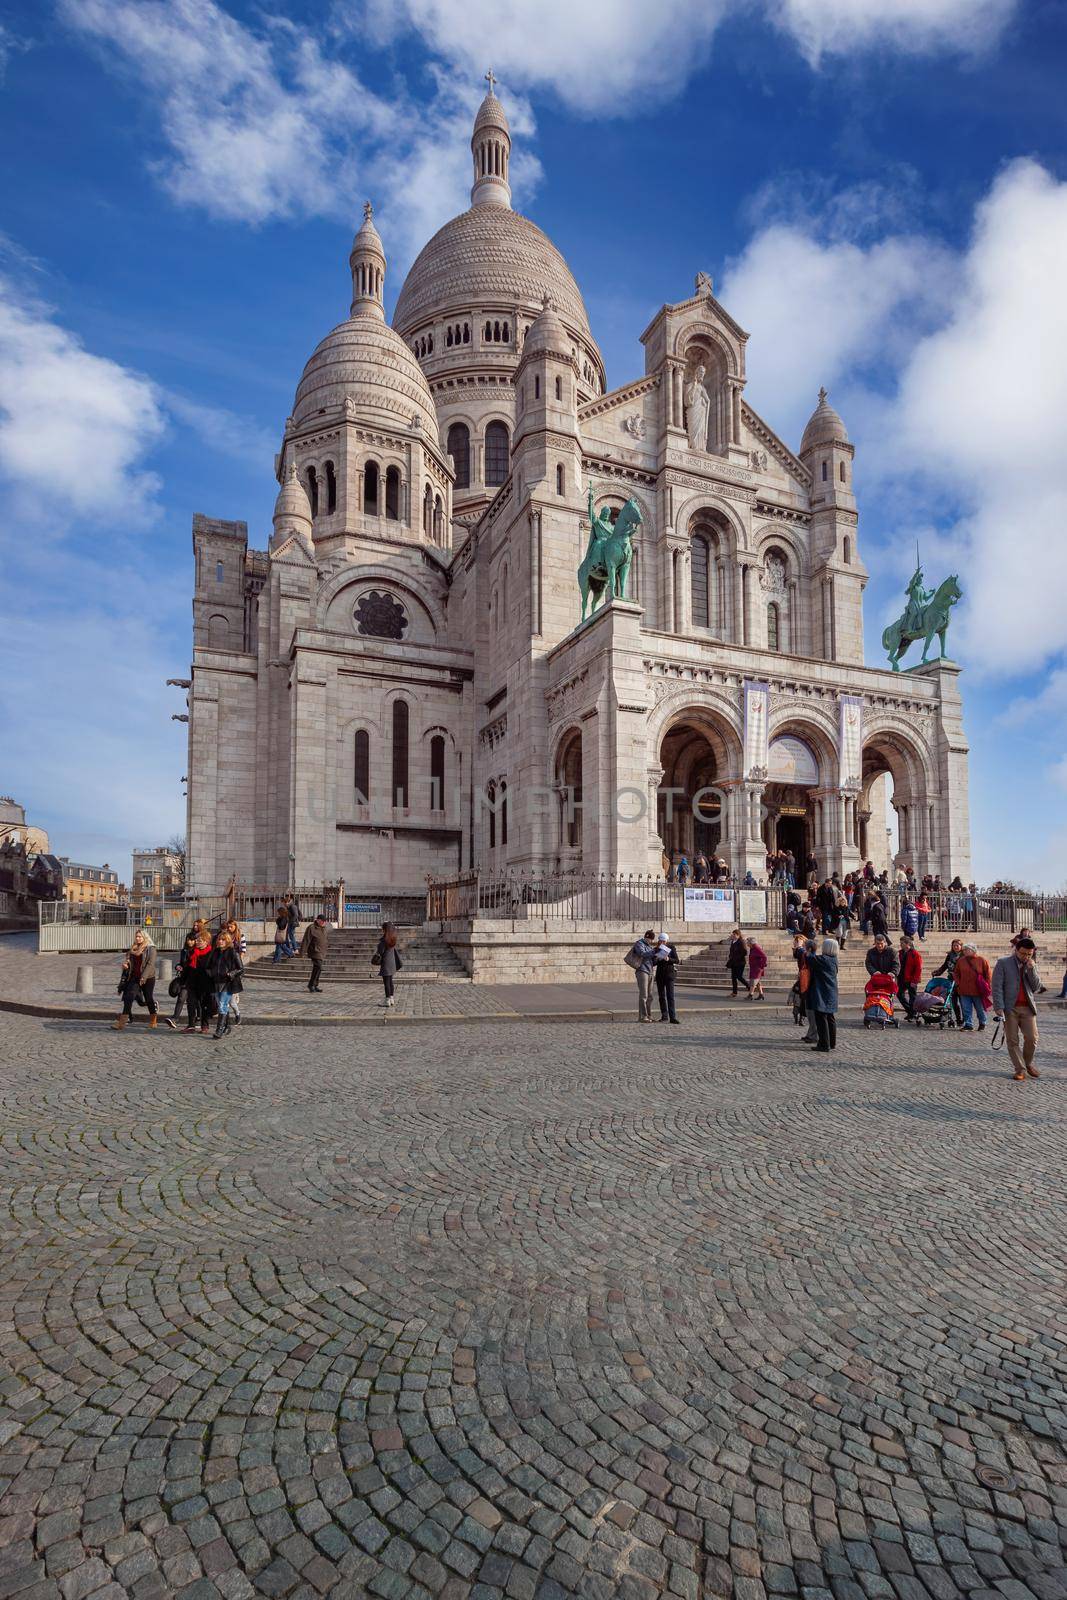 Tourists near the Sacre Coeur Basilica, Paris, France by zhu_zhu